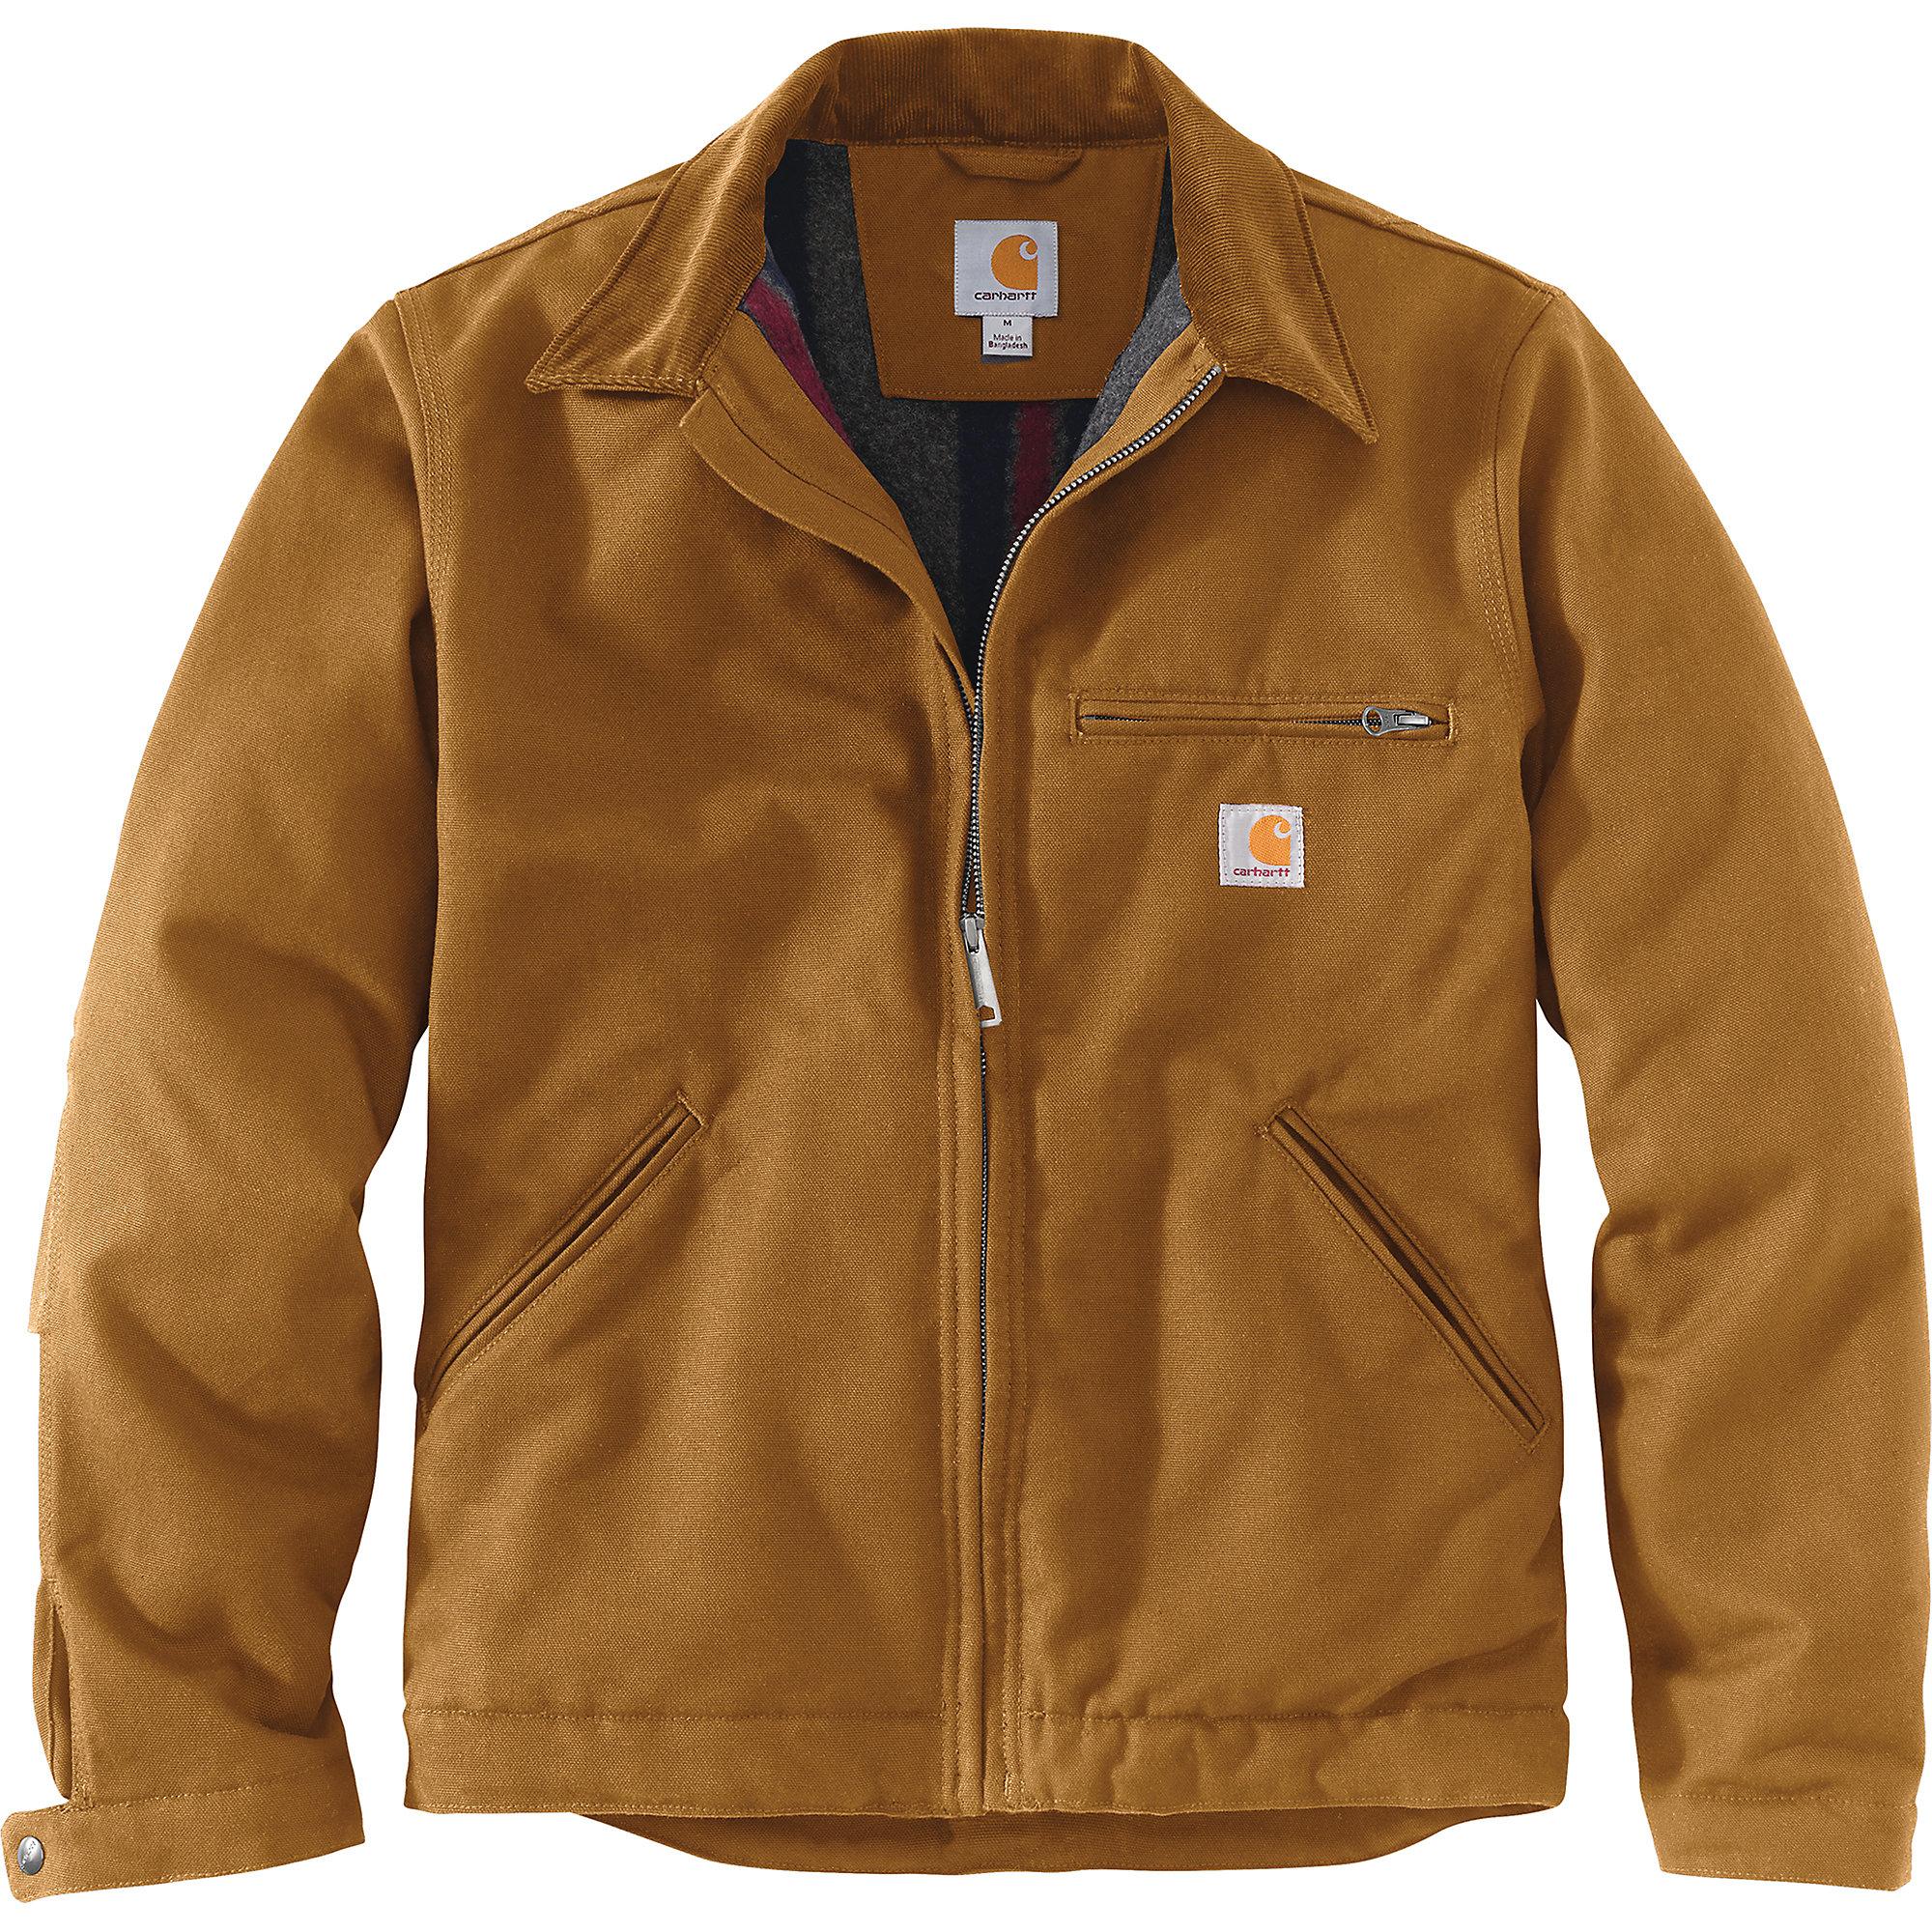 Carhartt Cotton Duck Detroit Jacket in Brown for Men - Lyst